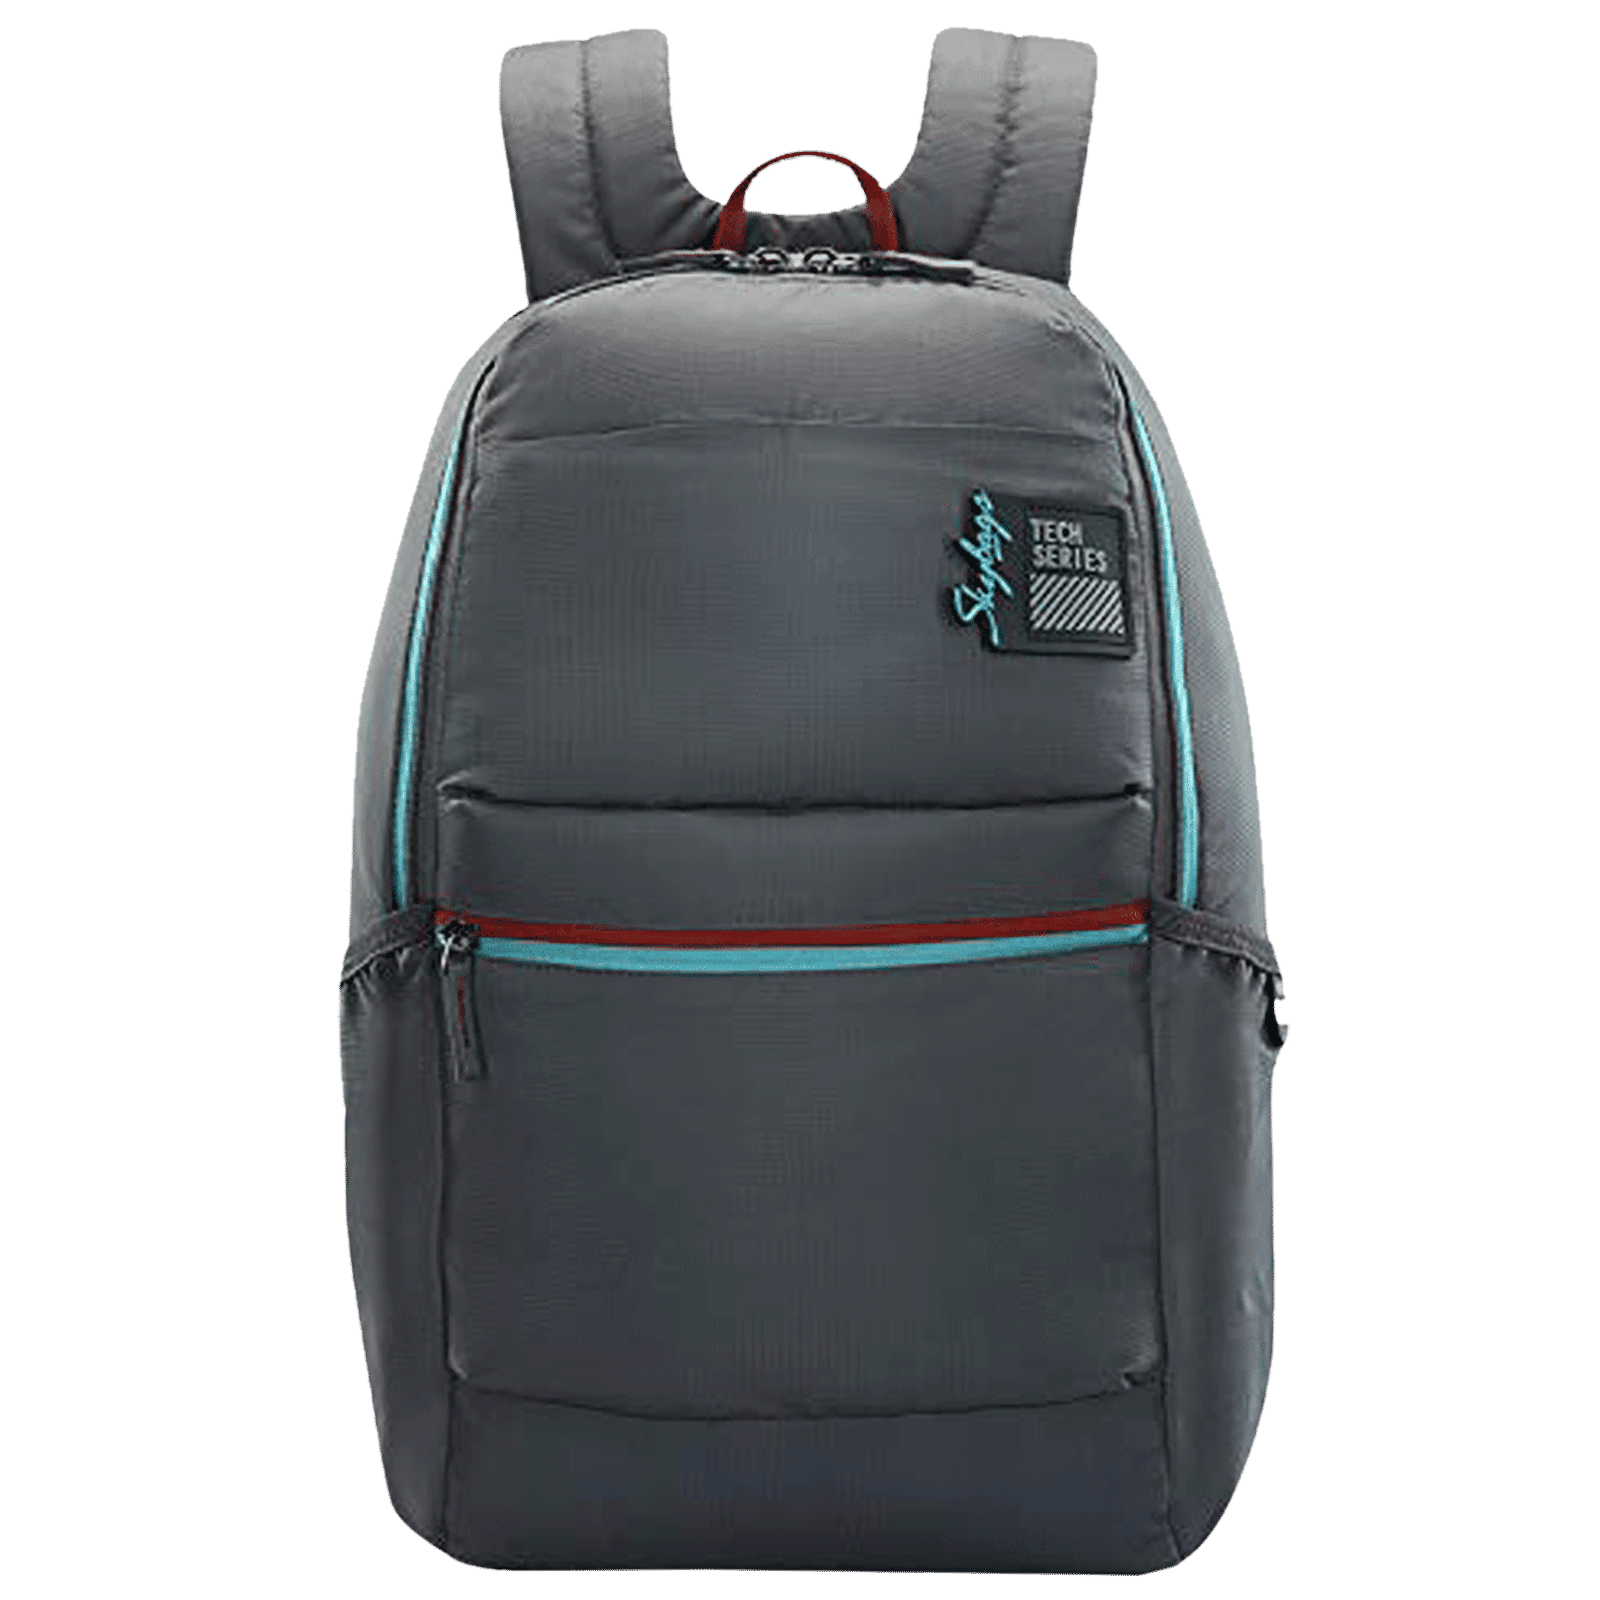 Best laptop bag under 2500 | executive backpack | bag for laptop and tablet  - YouTube